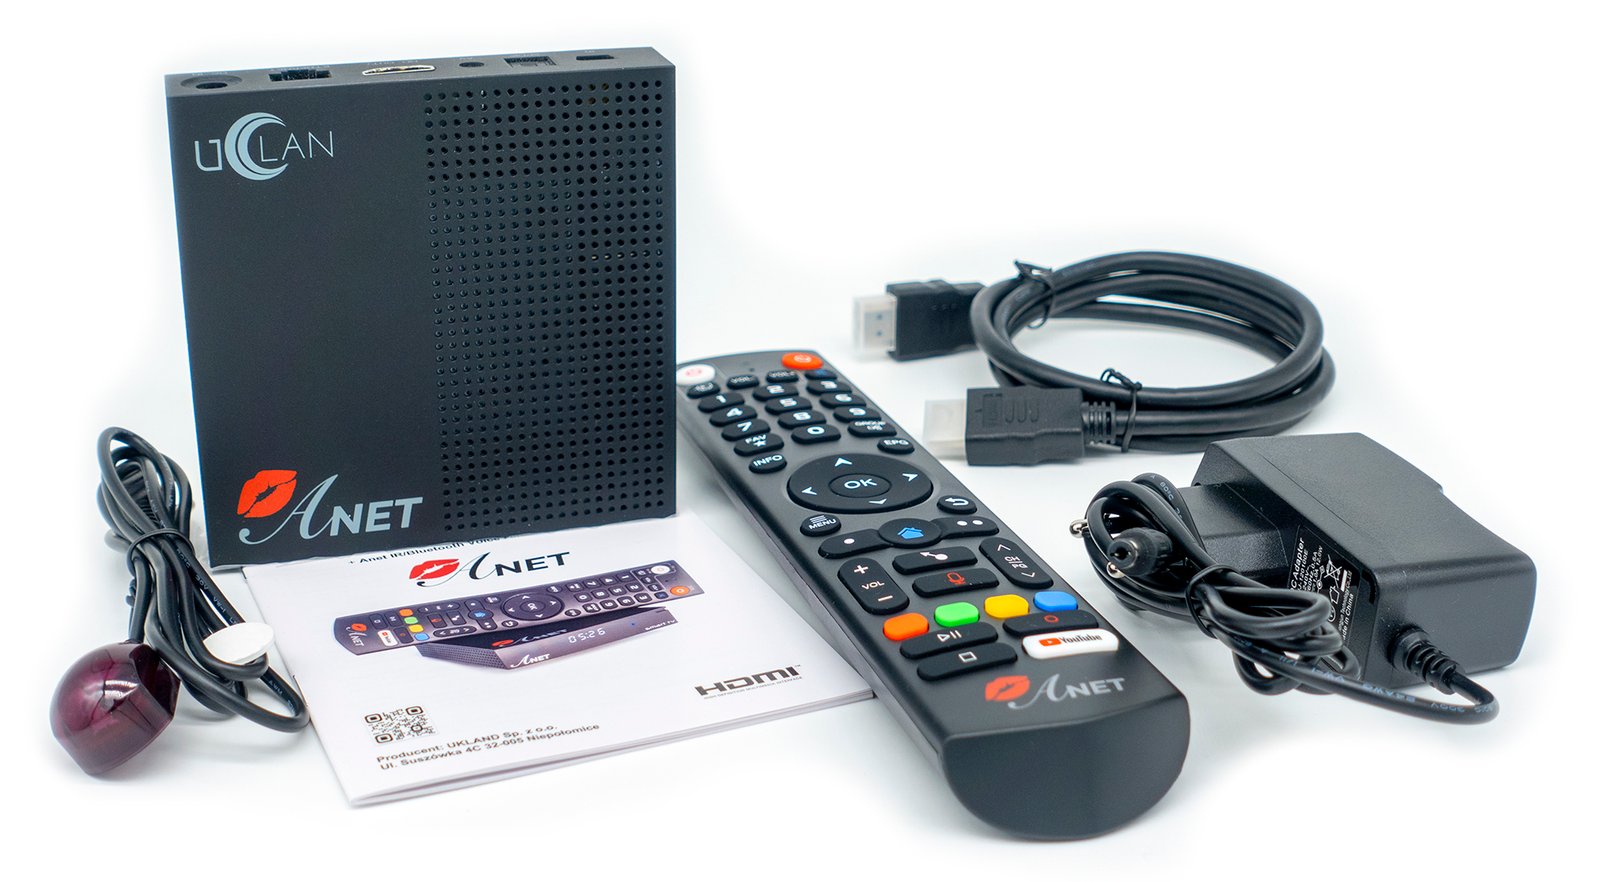 Anet smart TV box